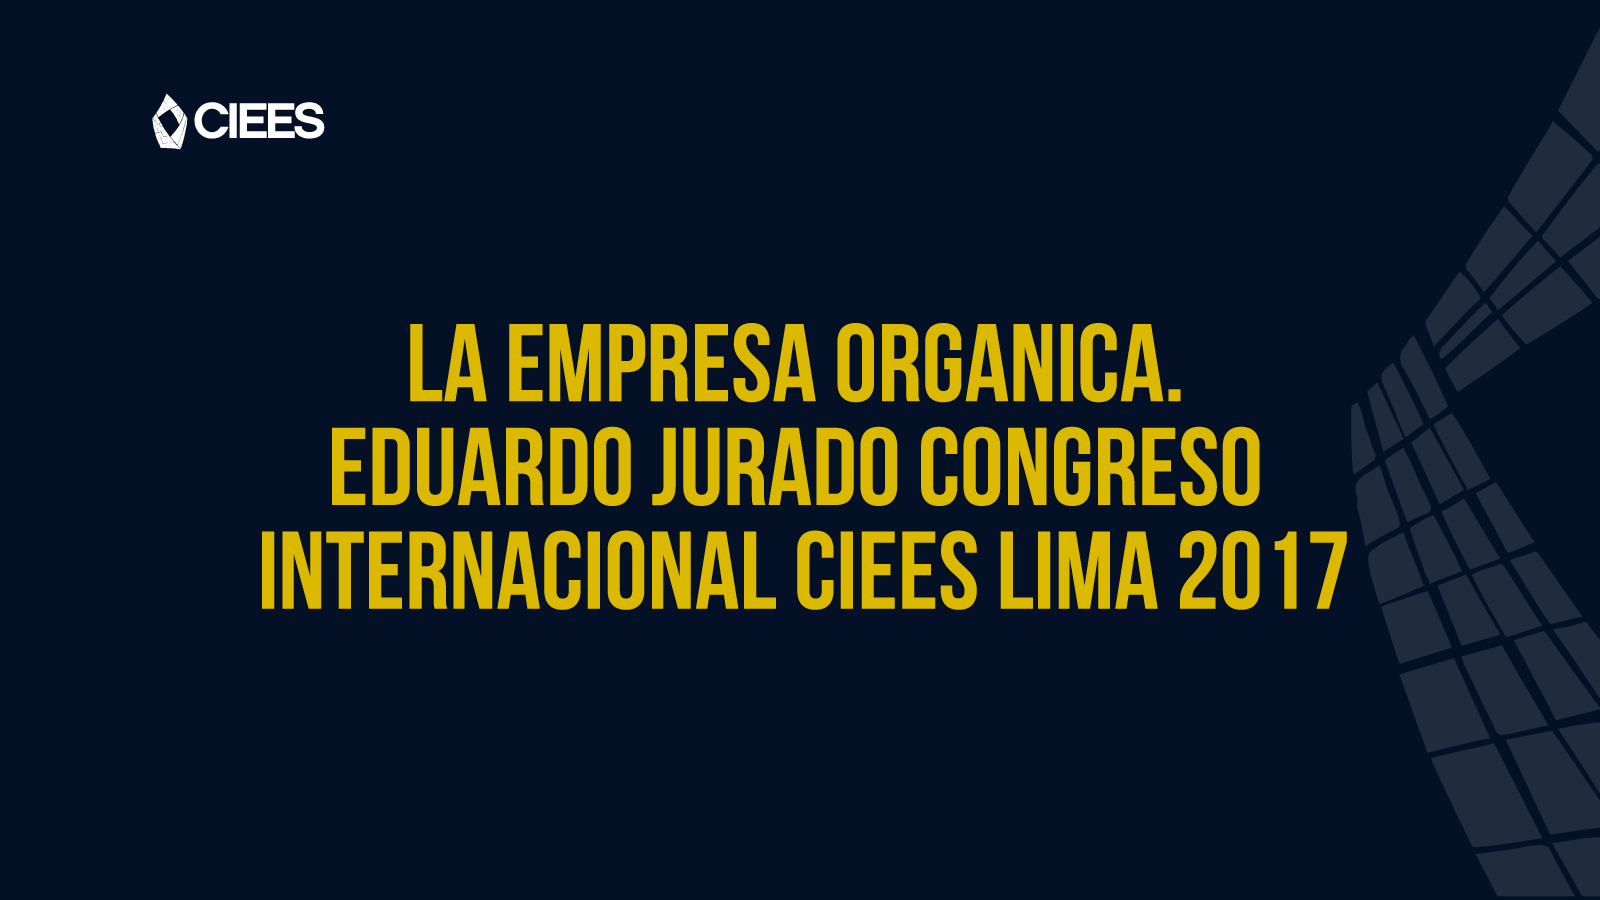 La empresa organica. Eduardo Jurado Congreso Internacional CIEES Lima 2017